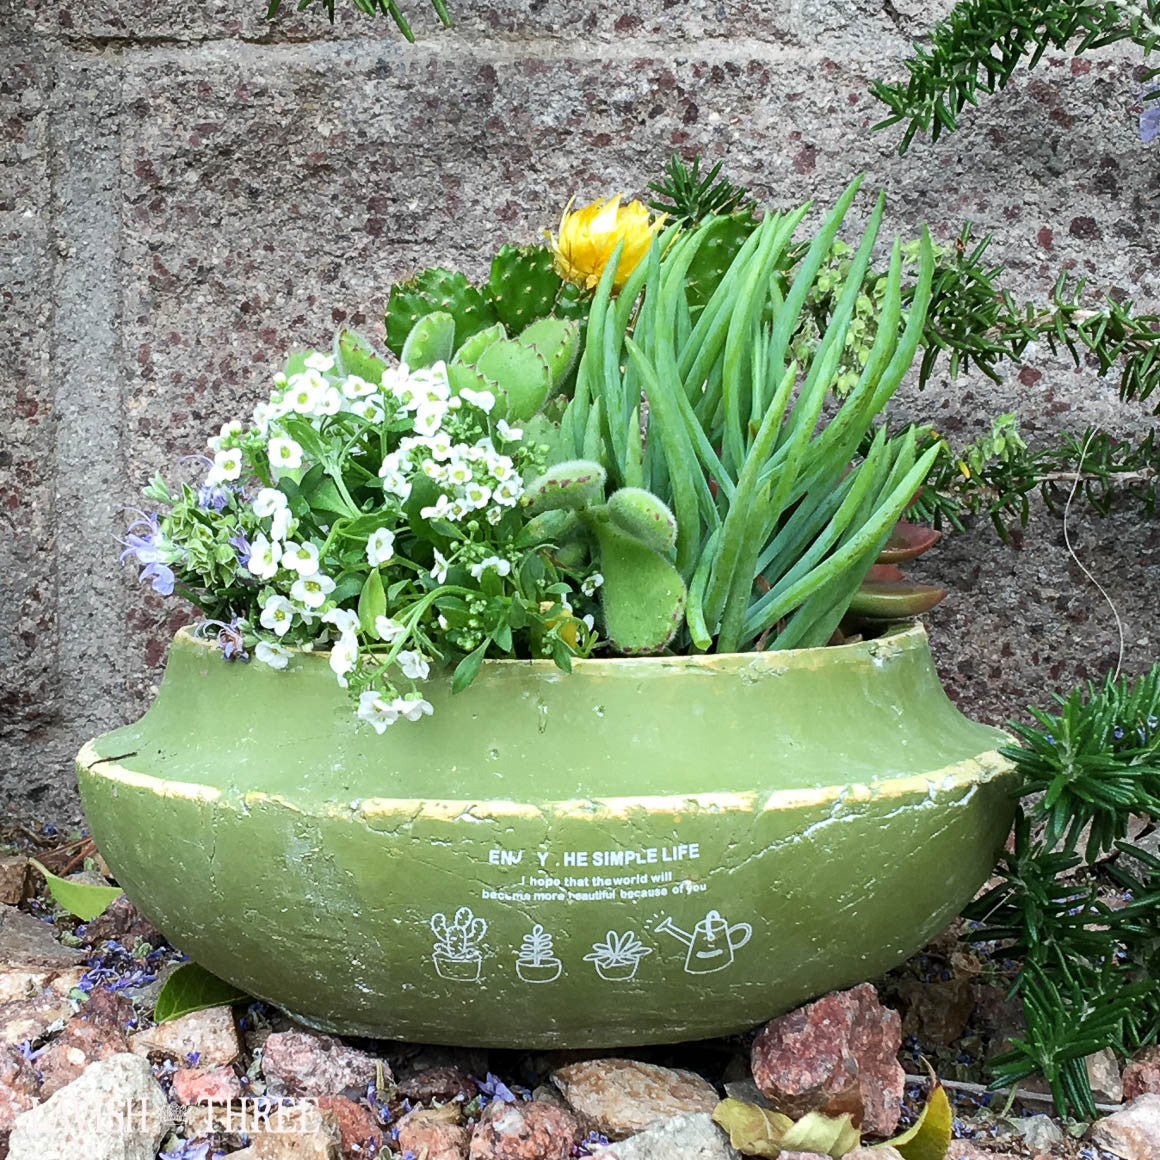 Enjoy the simple life garden cement planter for herbs or